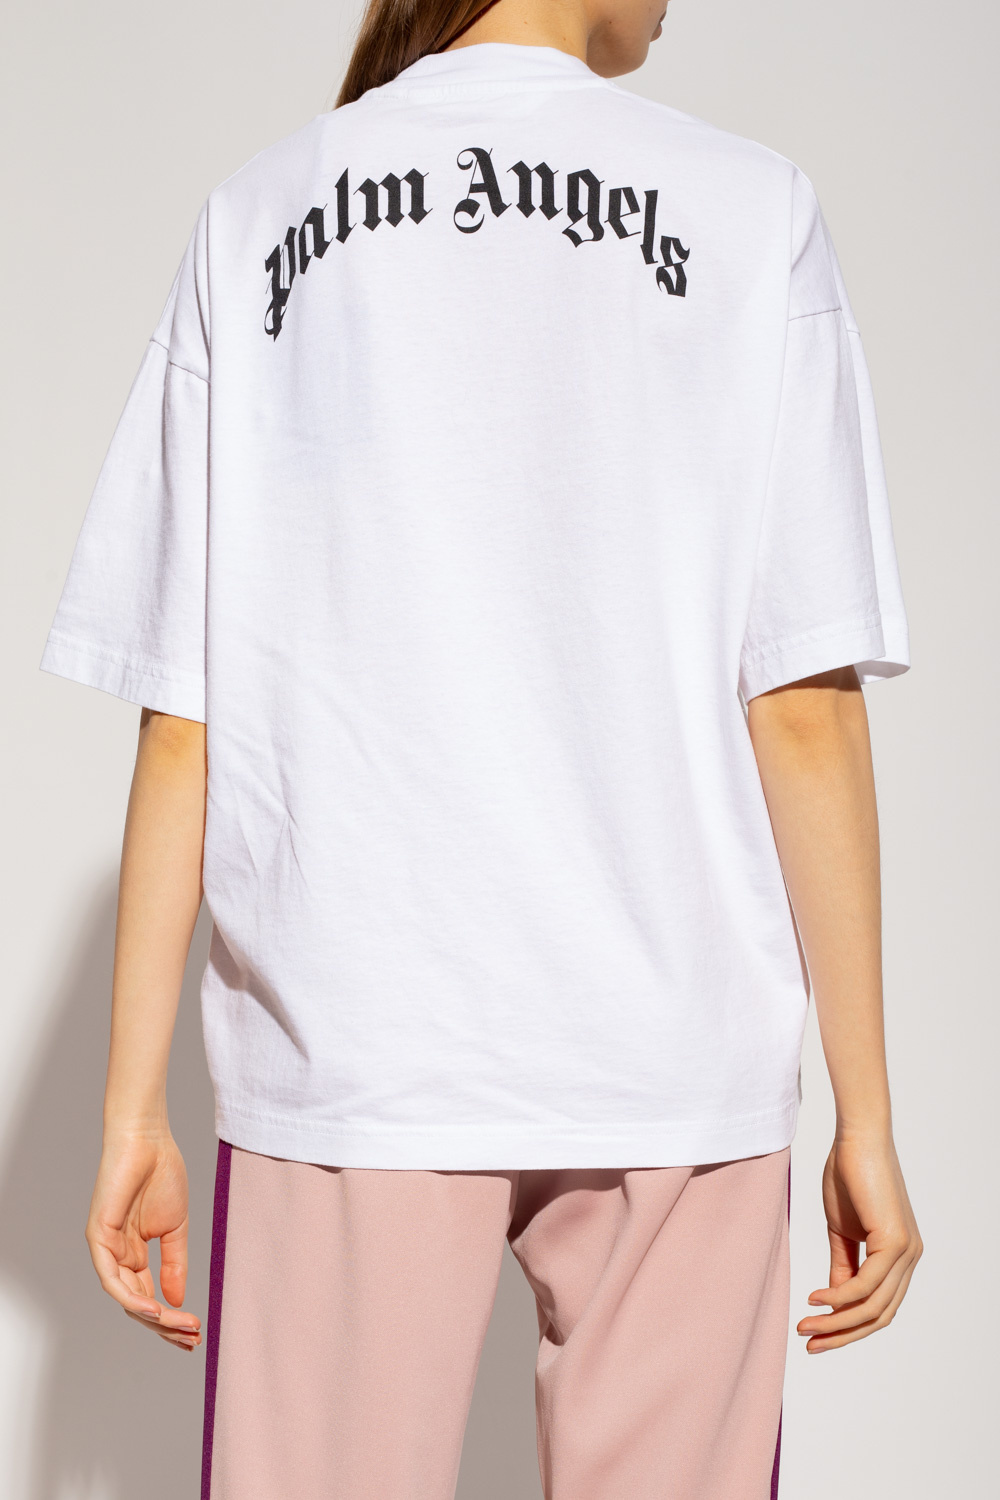 Palm Angels Oversize T-shirt, Women's Clothing